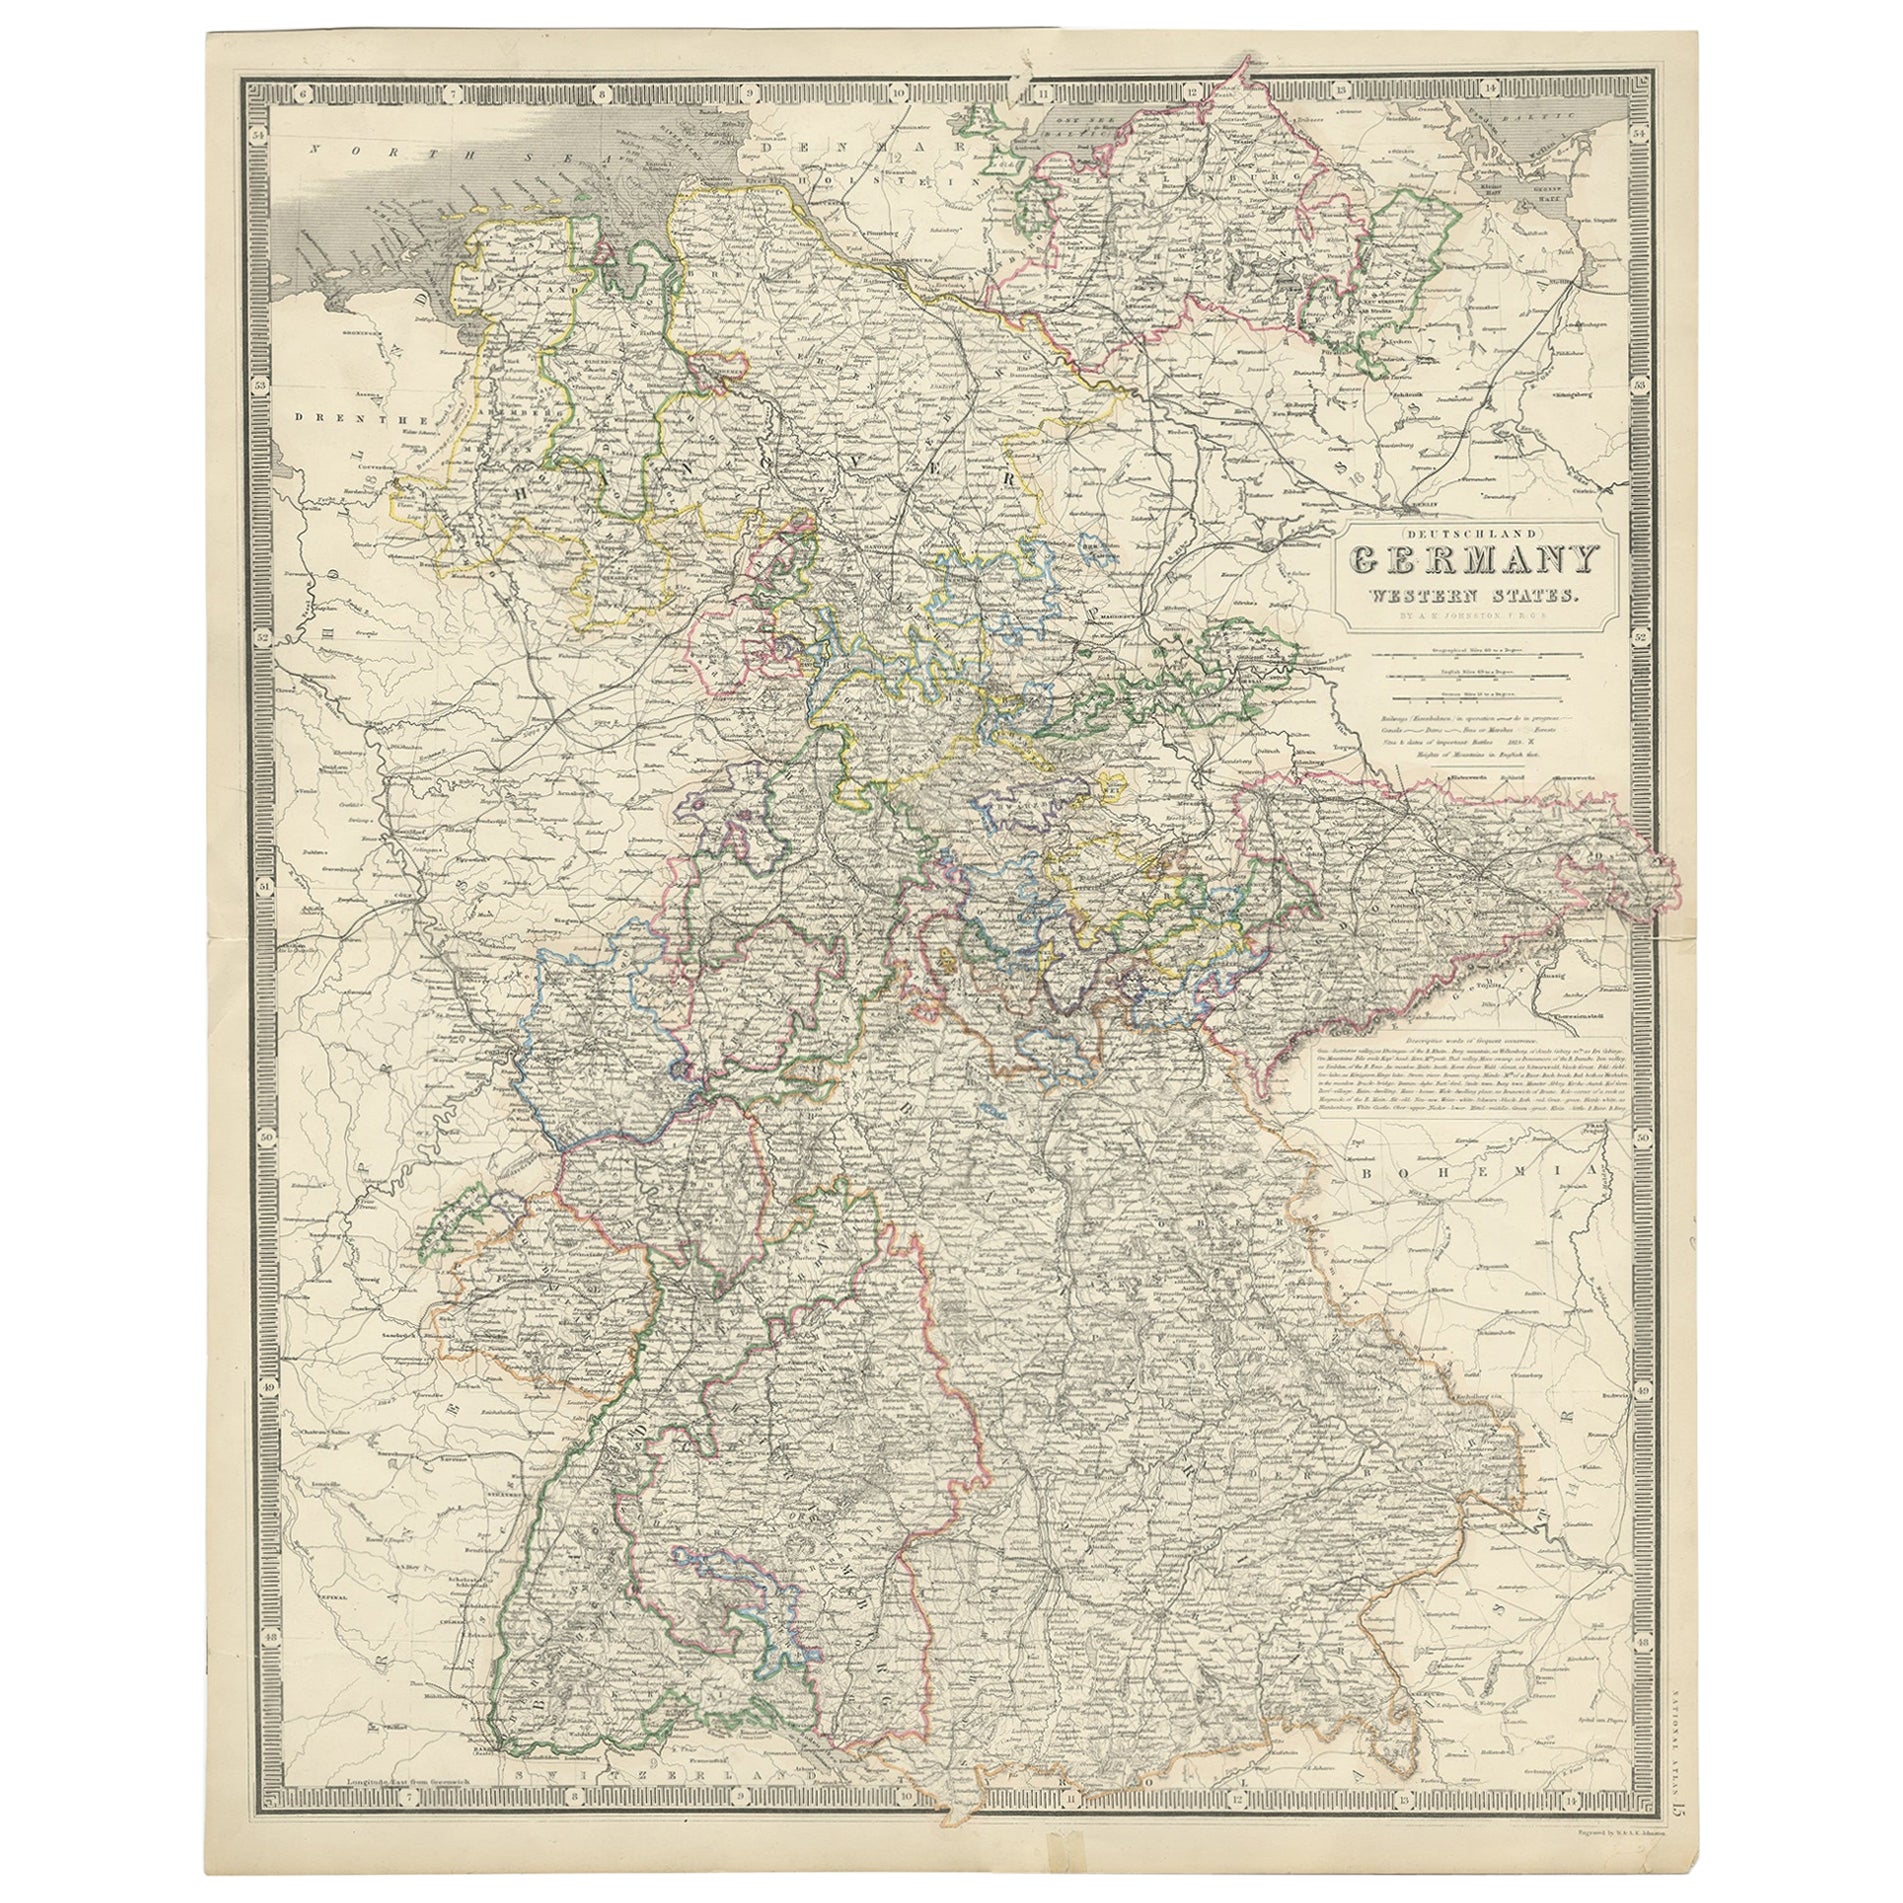 Map of West Germany Incl Regions Wurtemberg, Bavaria, Hanover, Etc, c.1850